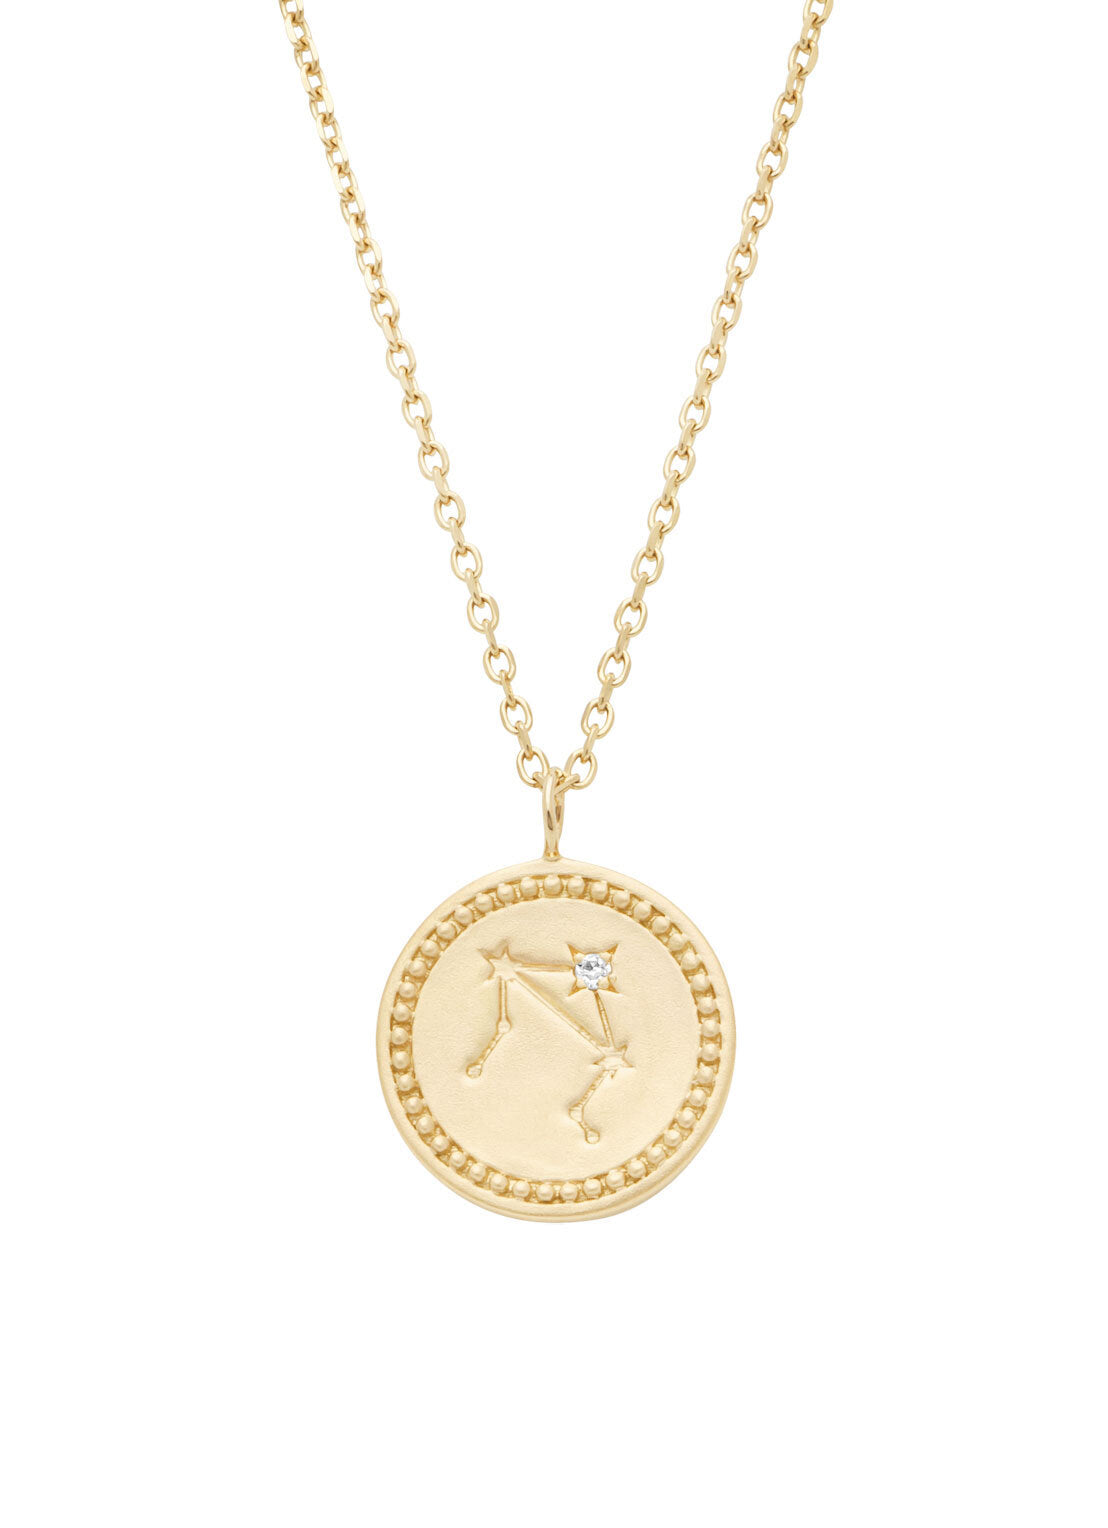 Geelgouden collier, Zodiac-Libra (Weegschaal)